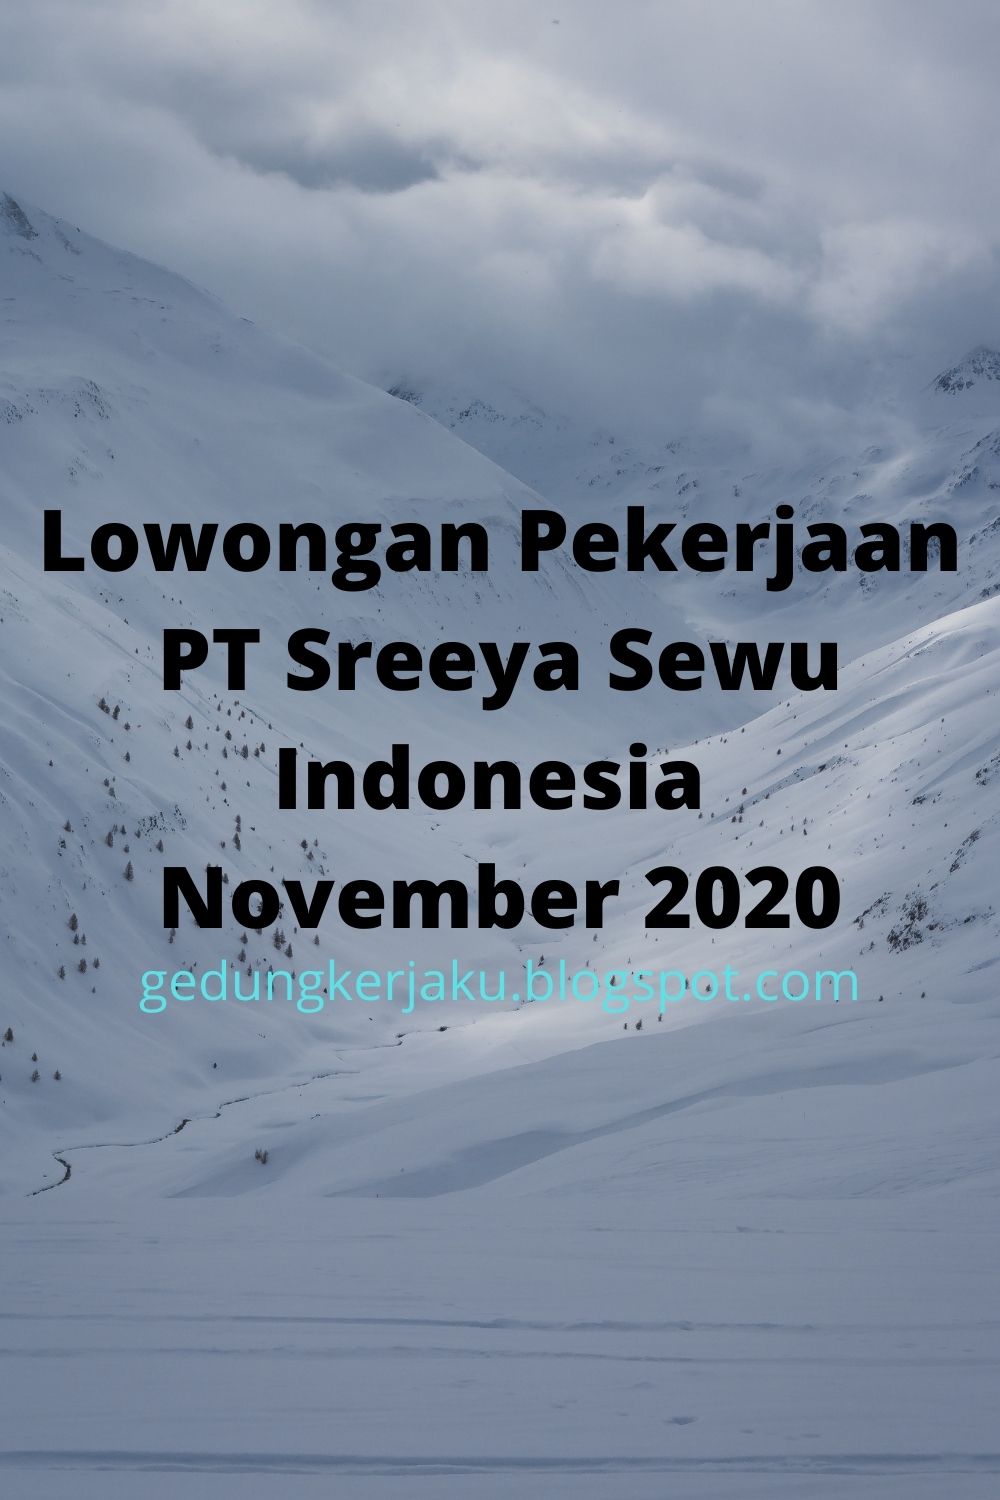 Lowongan Pekerjaan PT Sreeya Sewu Indonesia November 2020